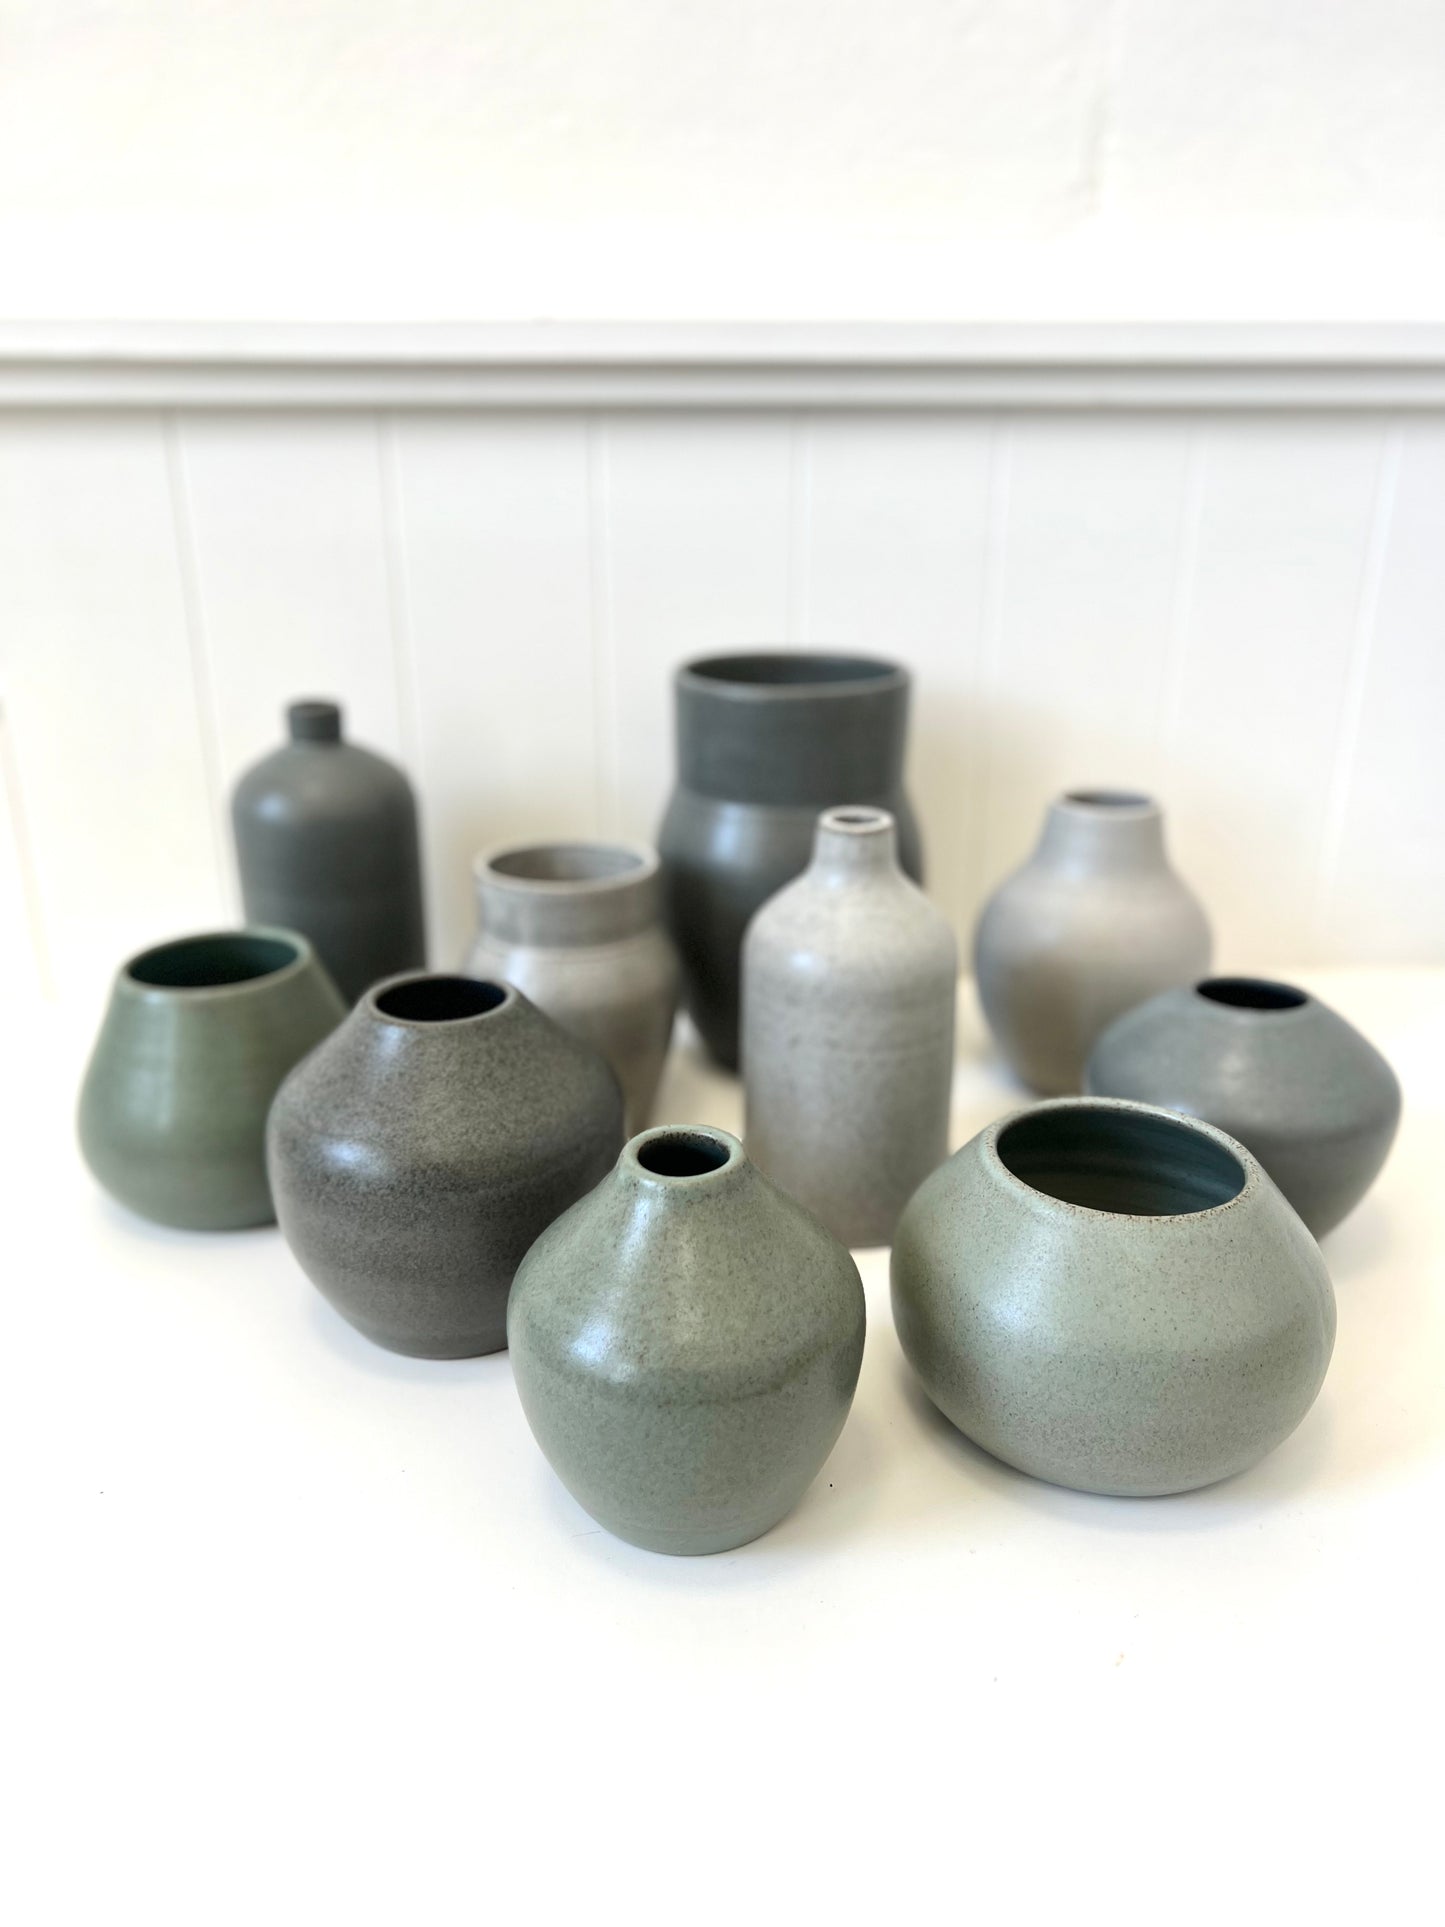 Handmade Ceramic Vase - Grey, 20cm x 13cm (#19)